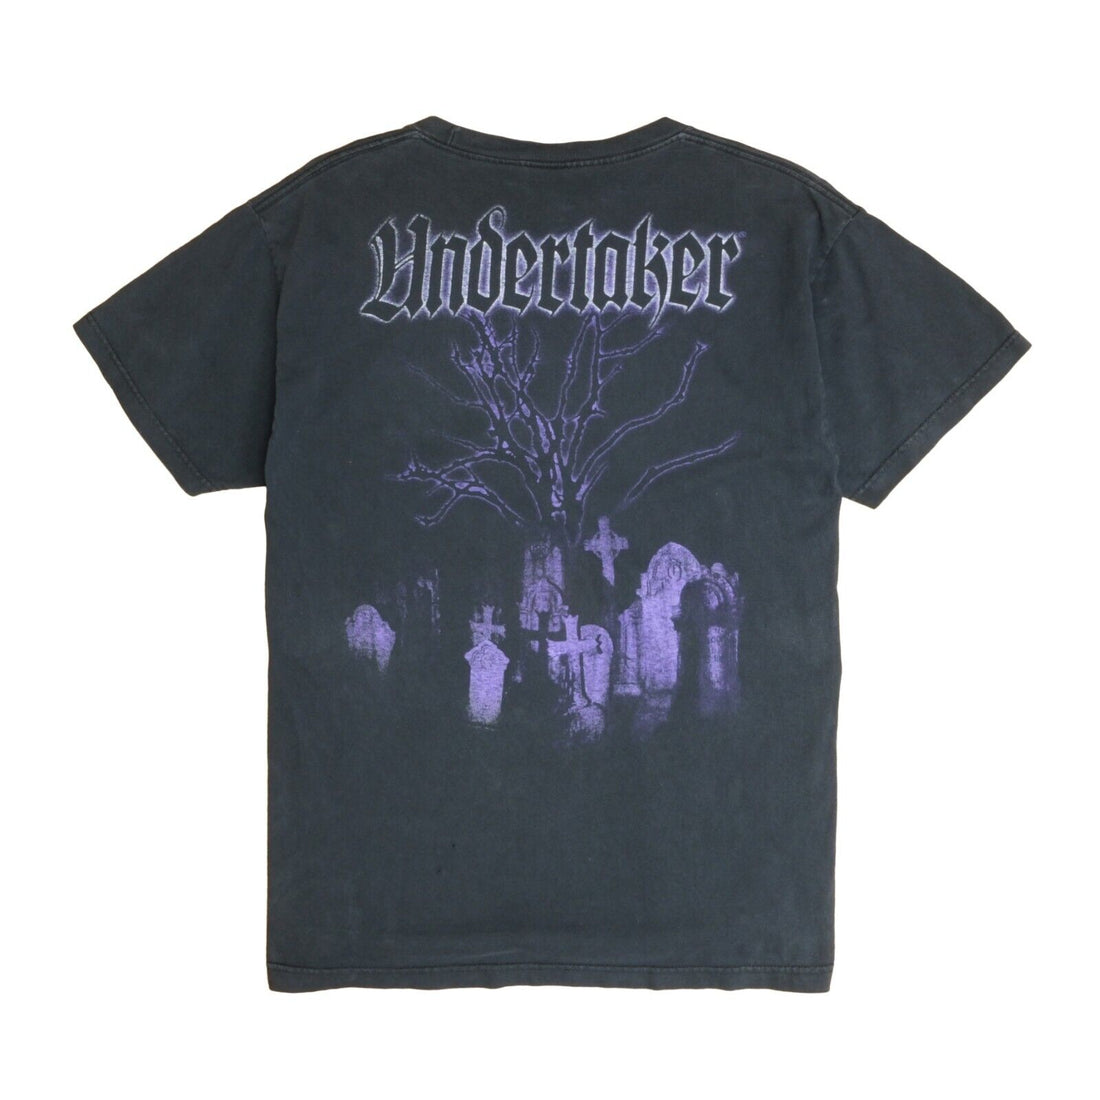 Vintage Undertaker Tombstone Wrestling T-Shirt Size Large Black WWE